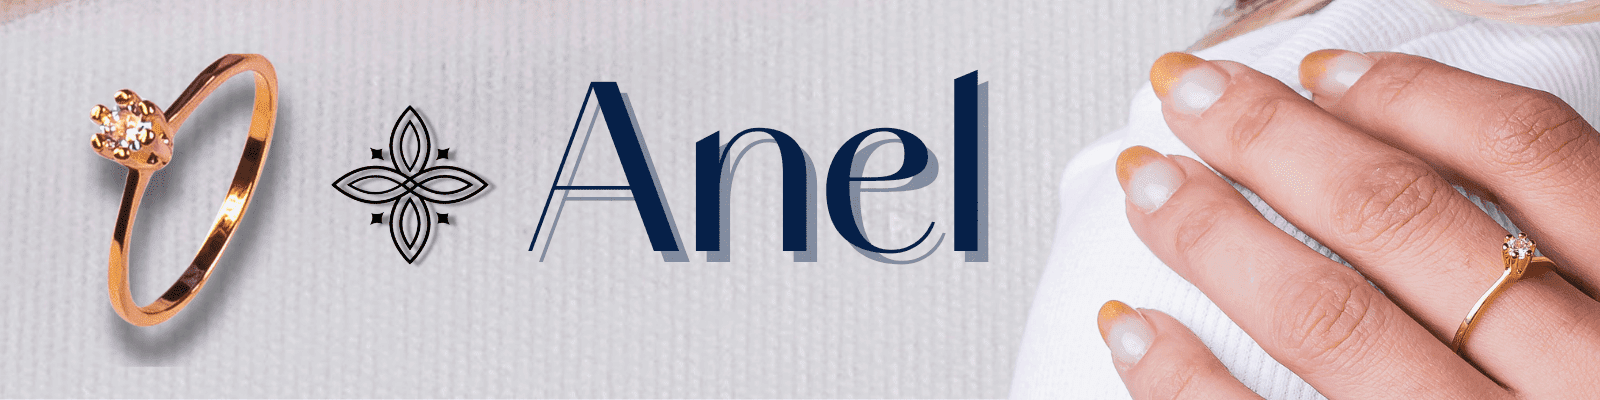 Anel